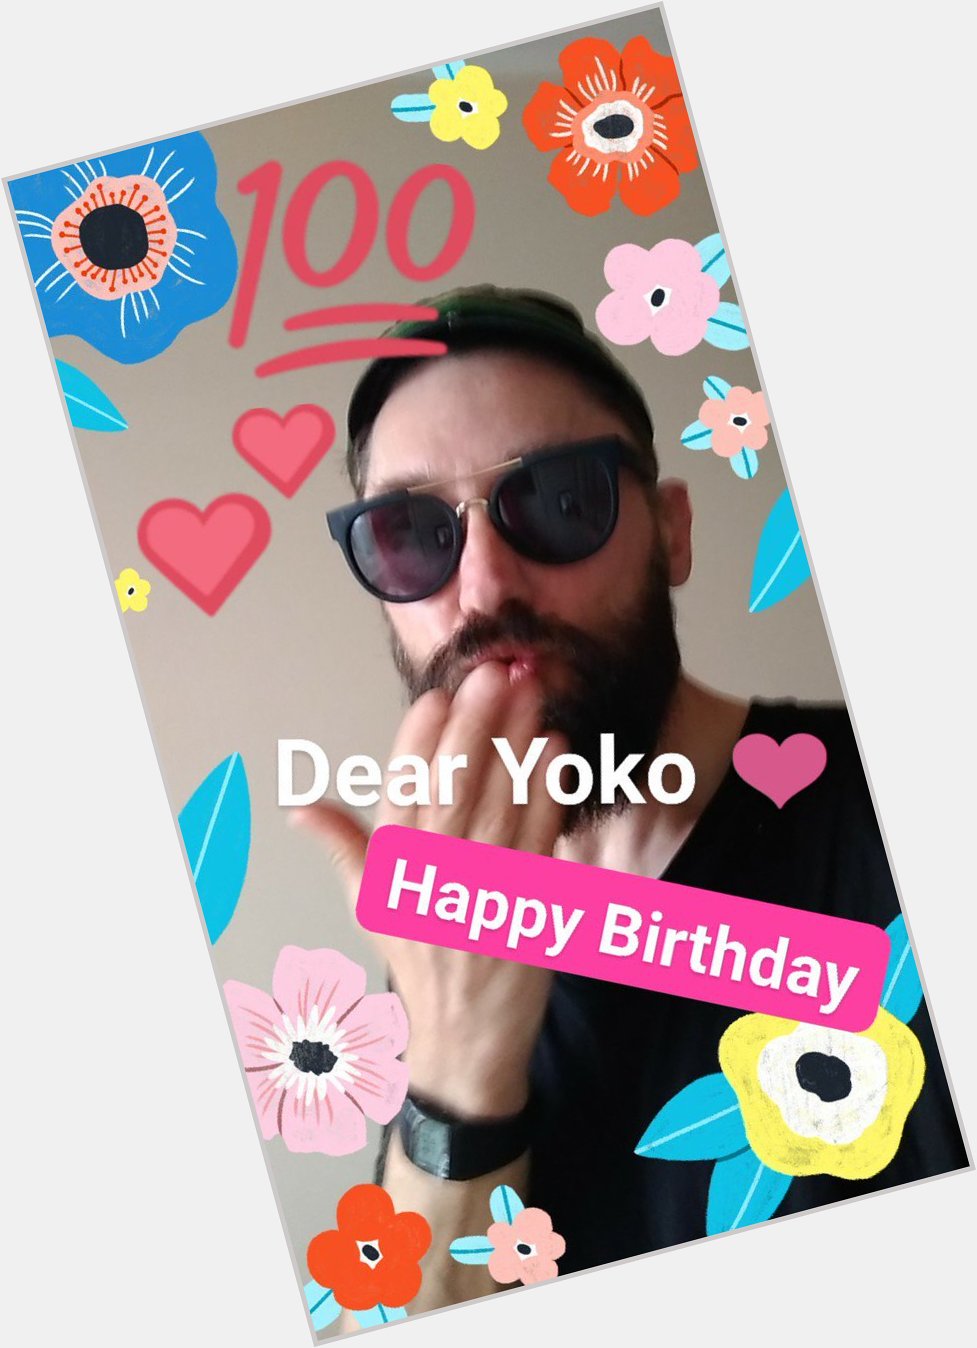  Dear Yoko Ono Happy Birthday. 
I wish You health for a million years. 